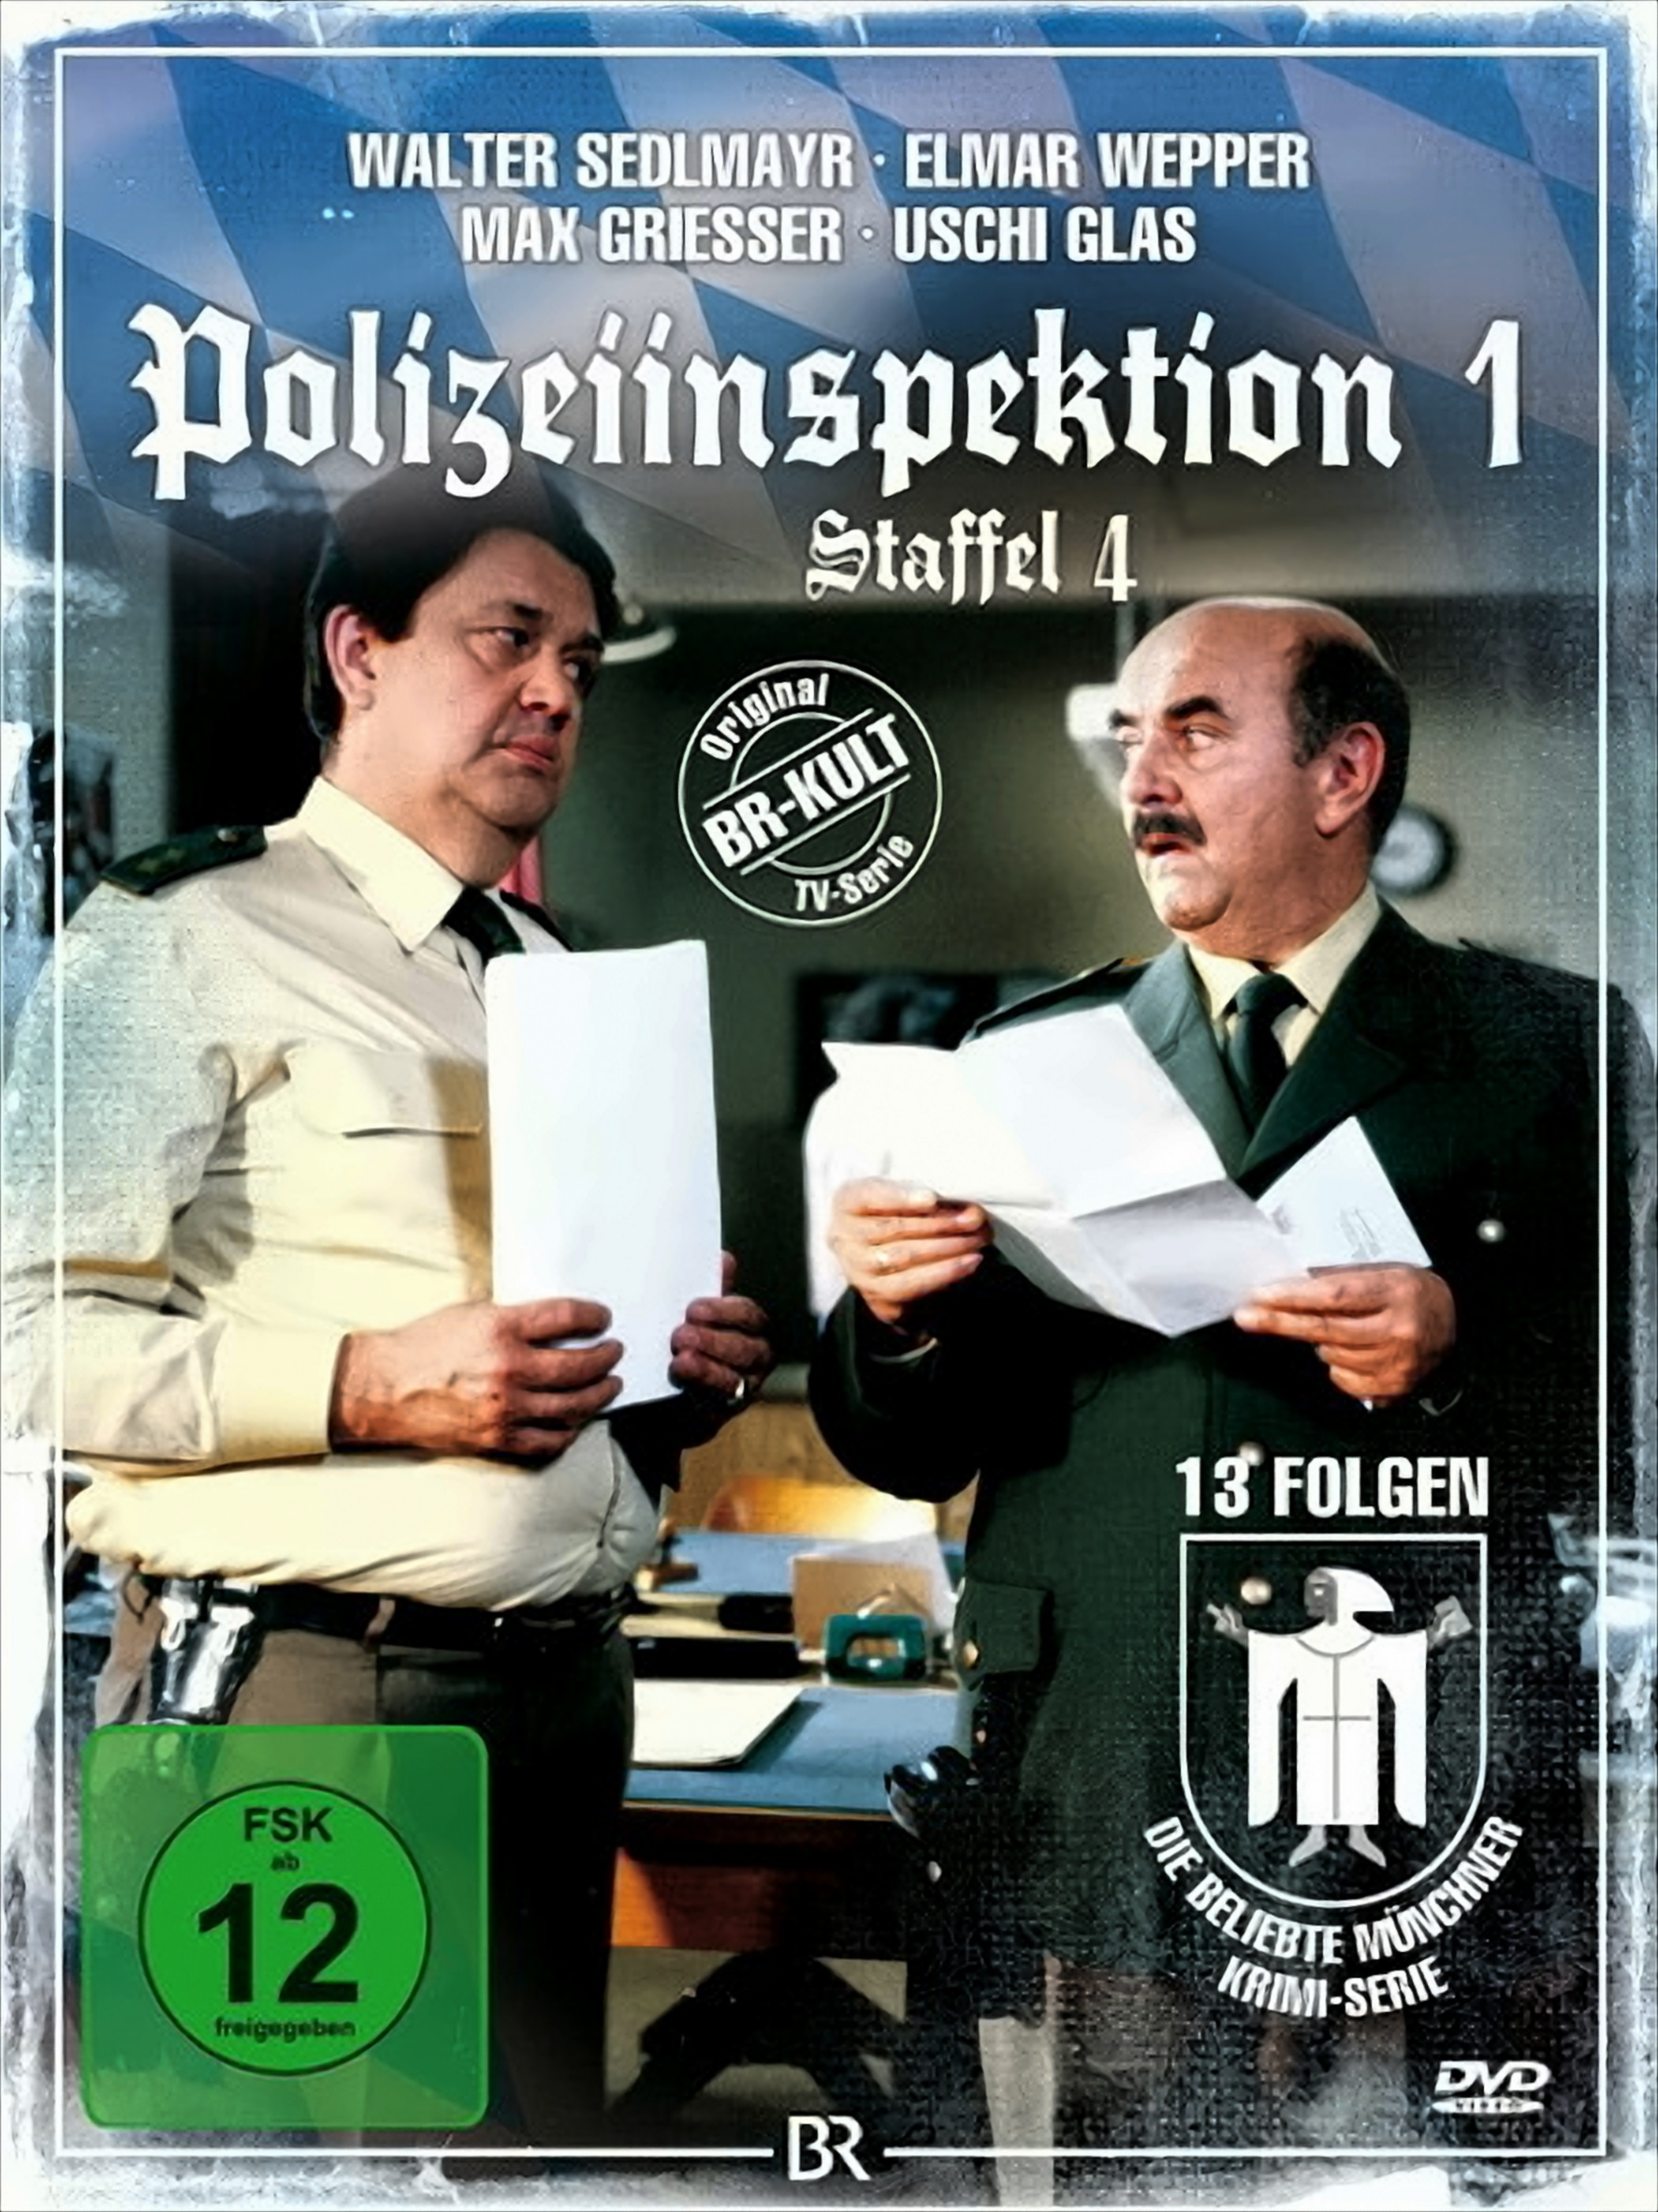 - Staffel 1 DVD Polizeiinspektion 04